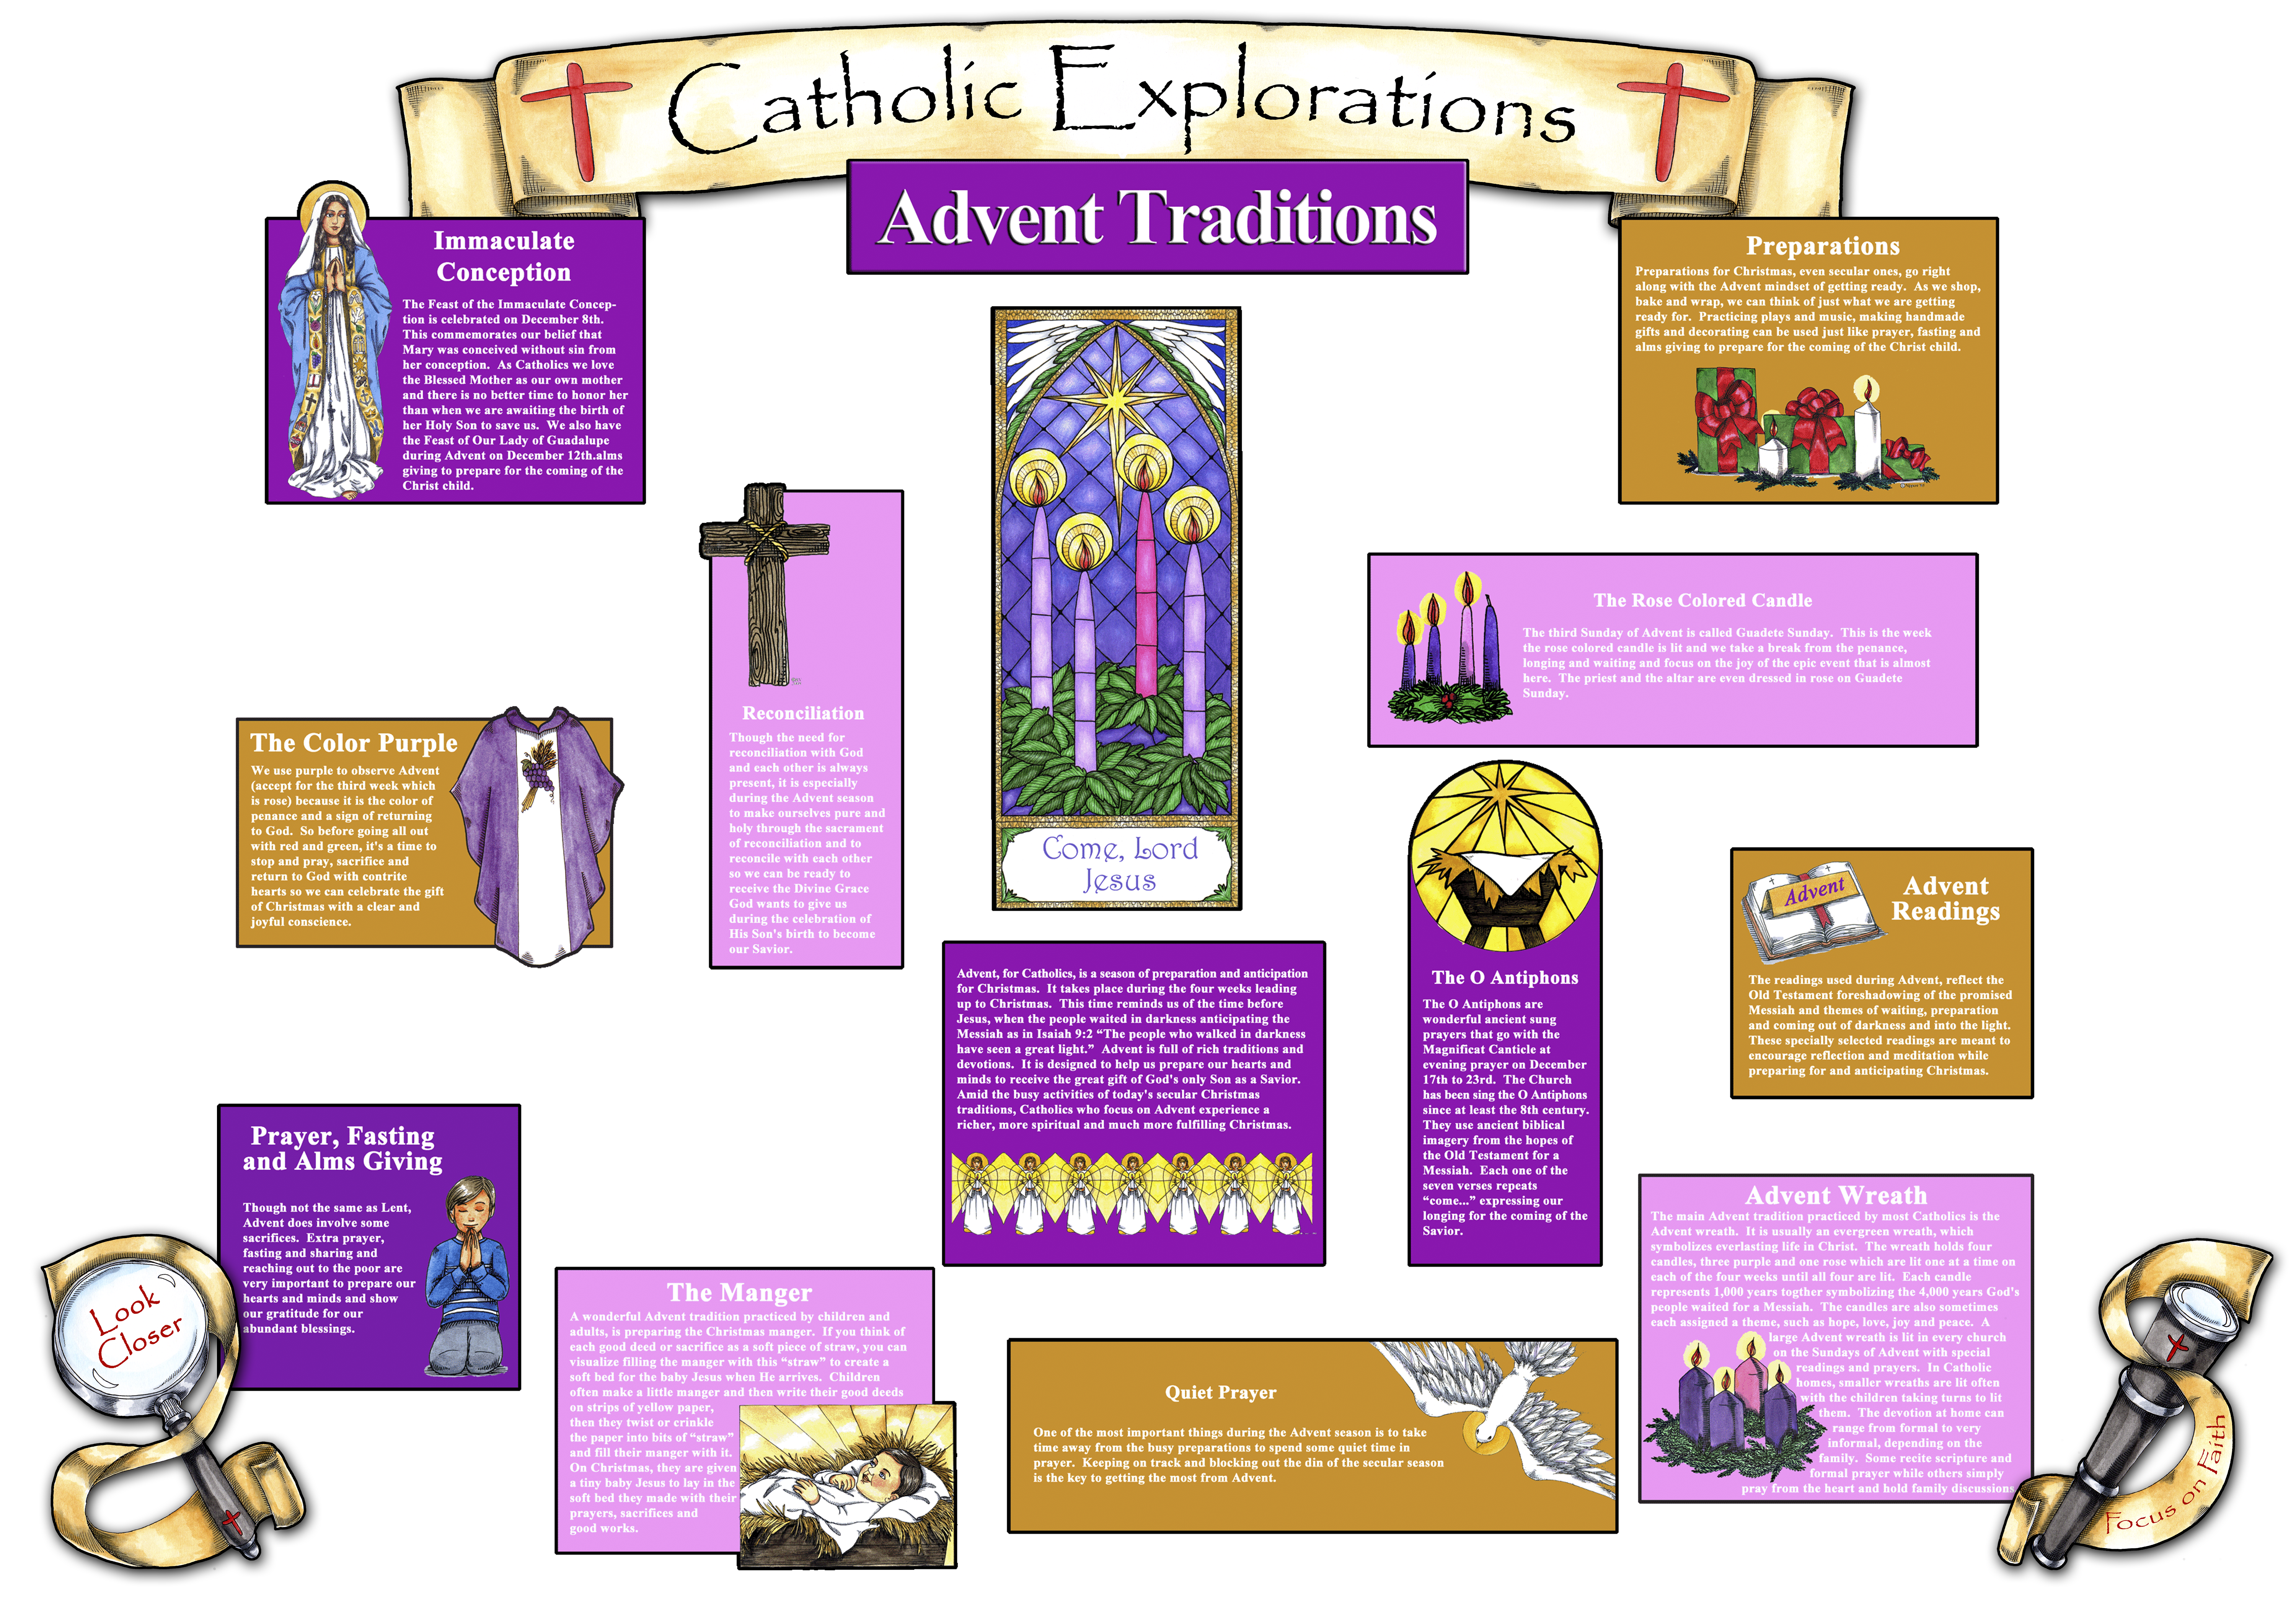 Catholic Explorations Advent Traditions